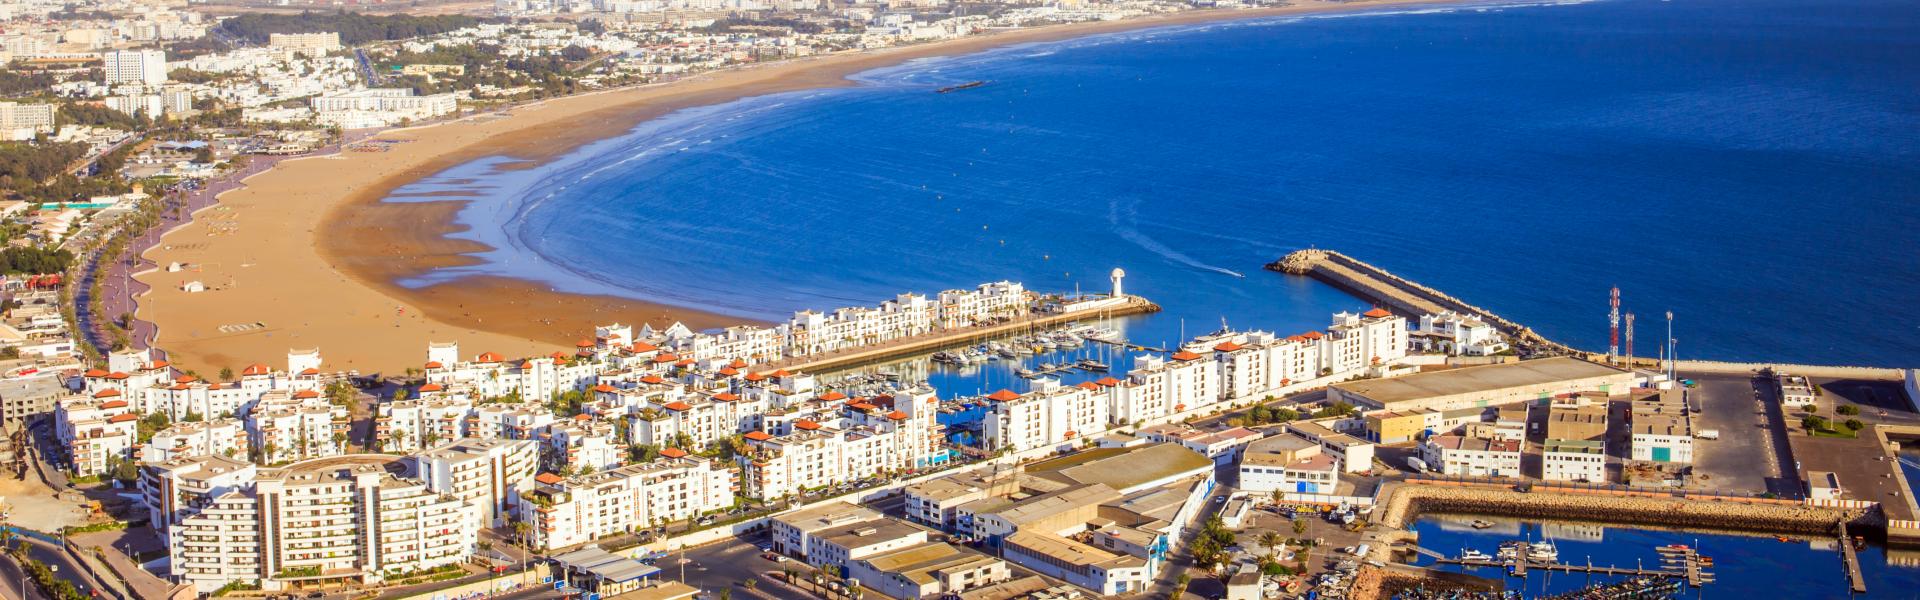 Noclegi w Agadirze - HomeToGo